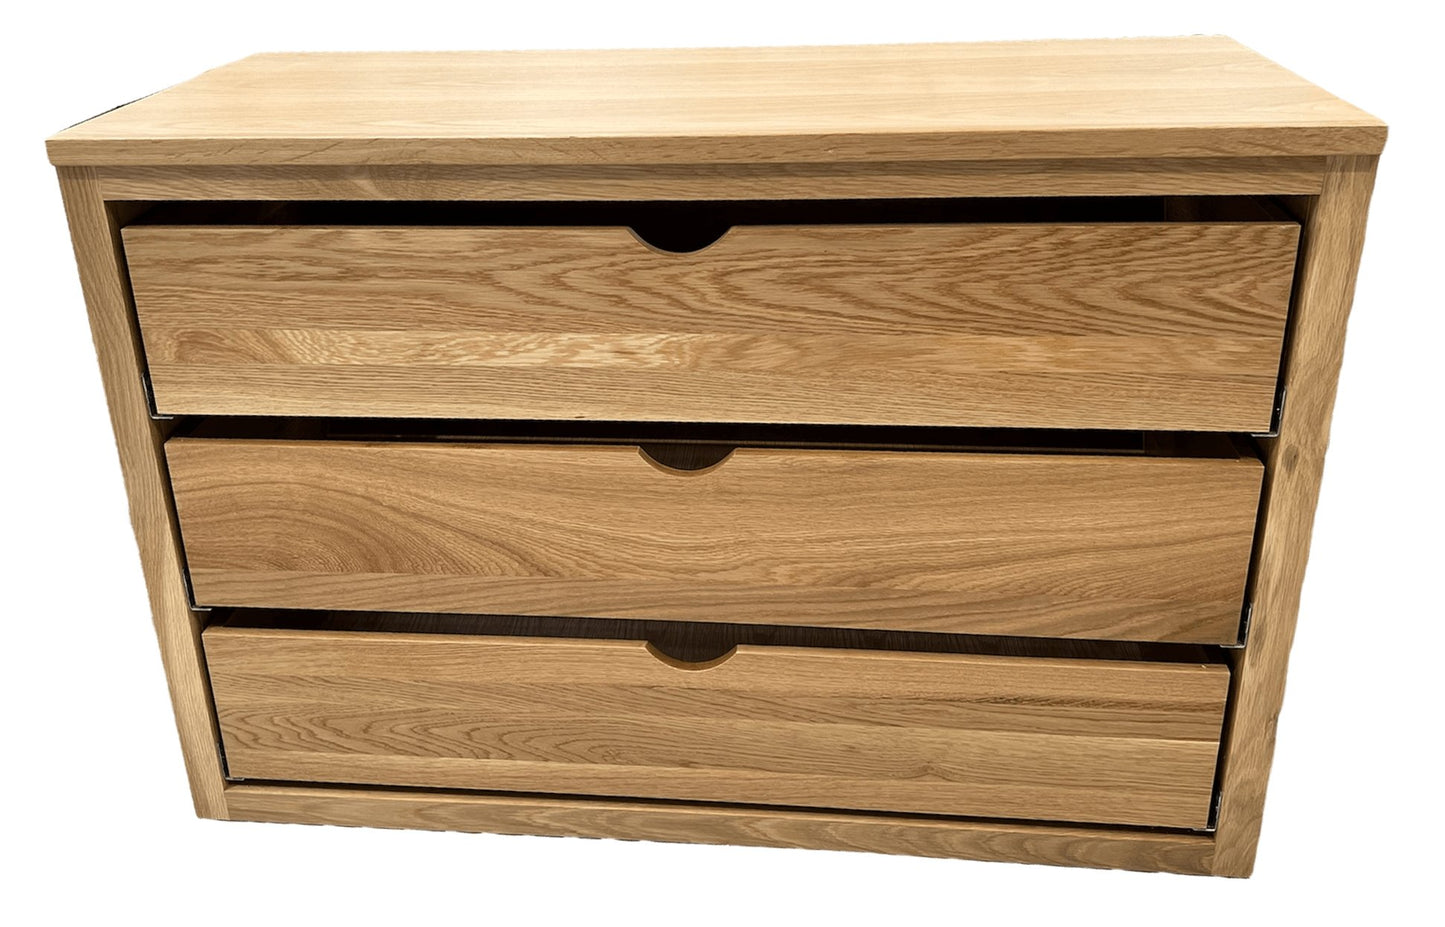 LI 1000 - Set of 3 Internal drawers for a 1000 larder - Classic Kitchens Direct